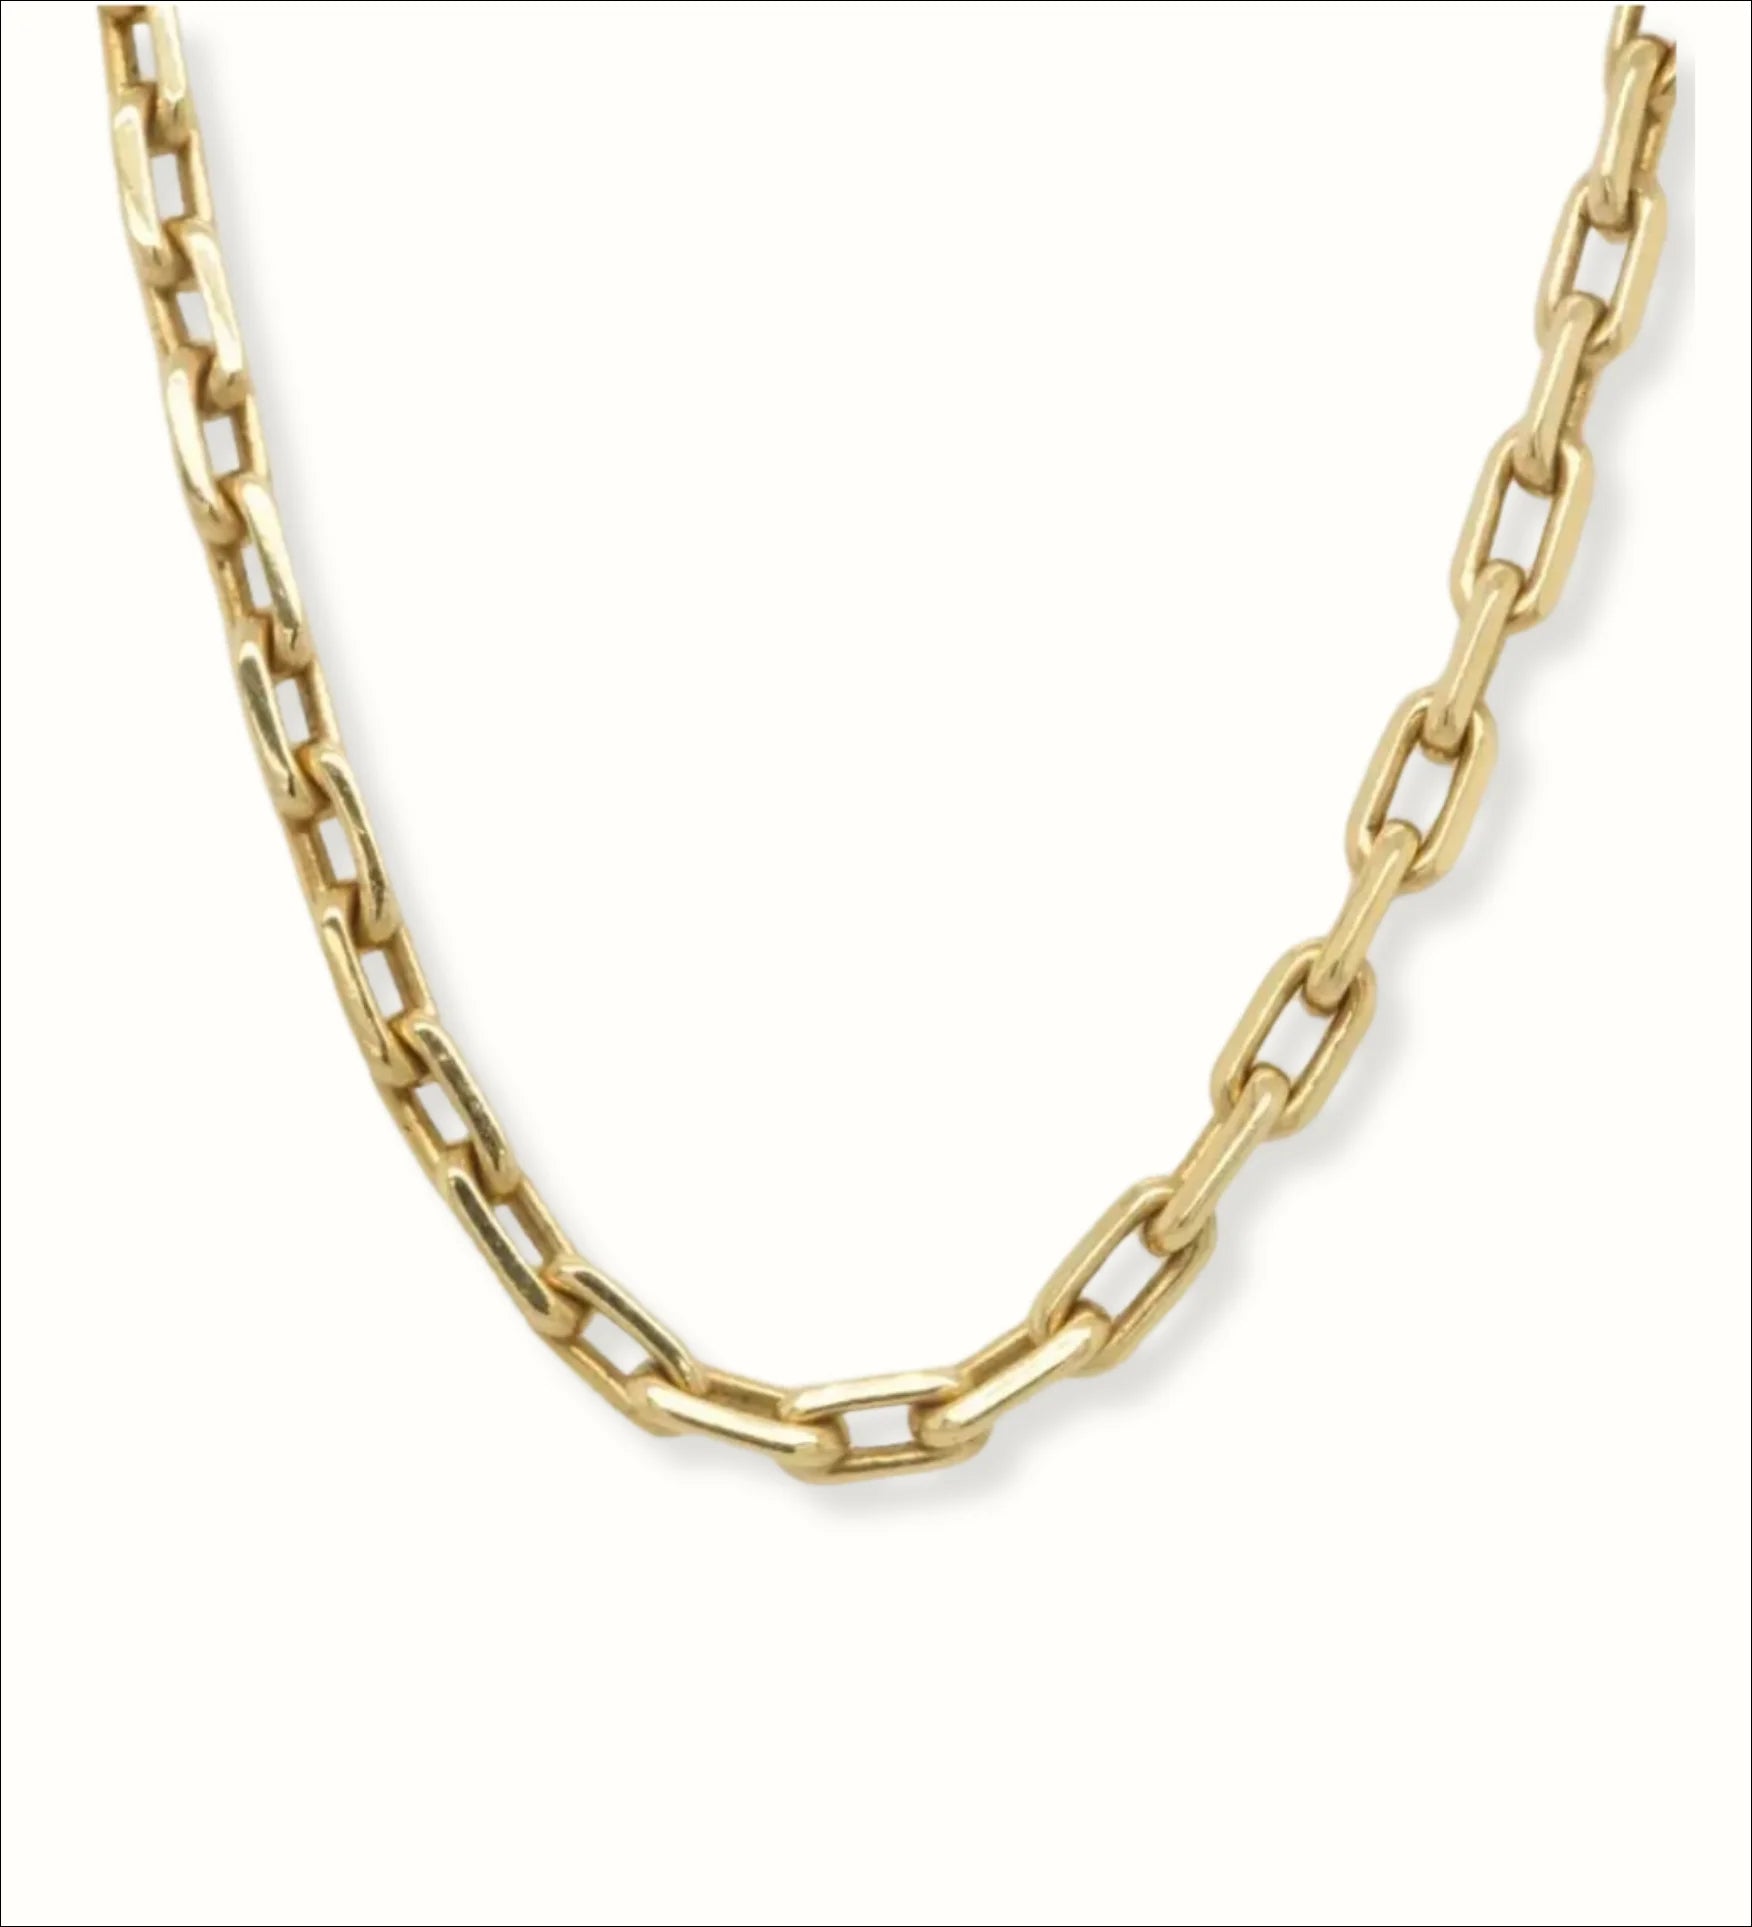 Gold Jewelry: 18k Diamond Cut Chain | Above $1000